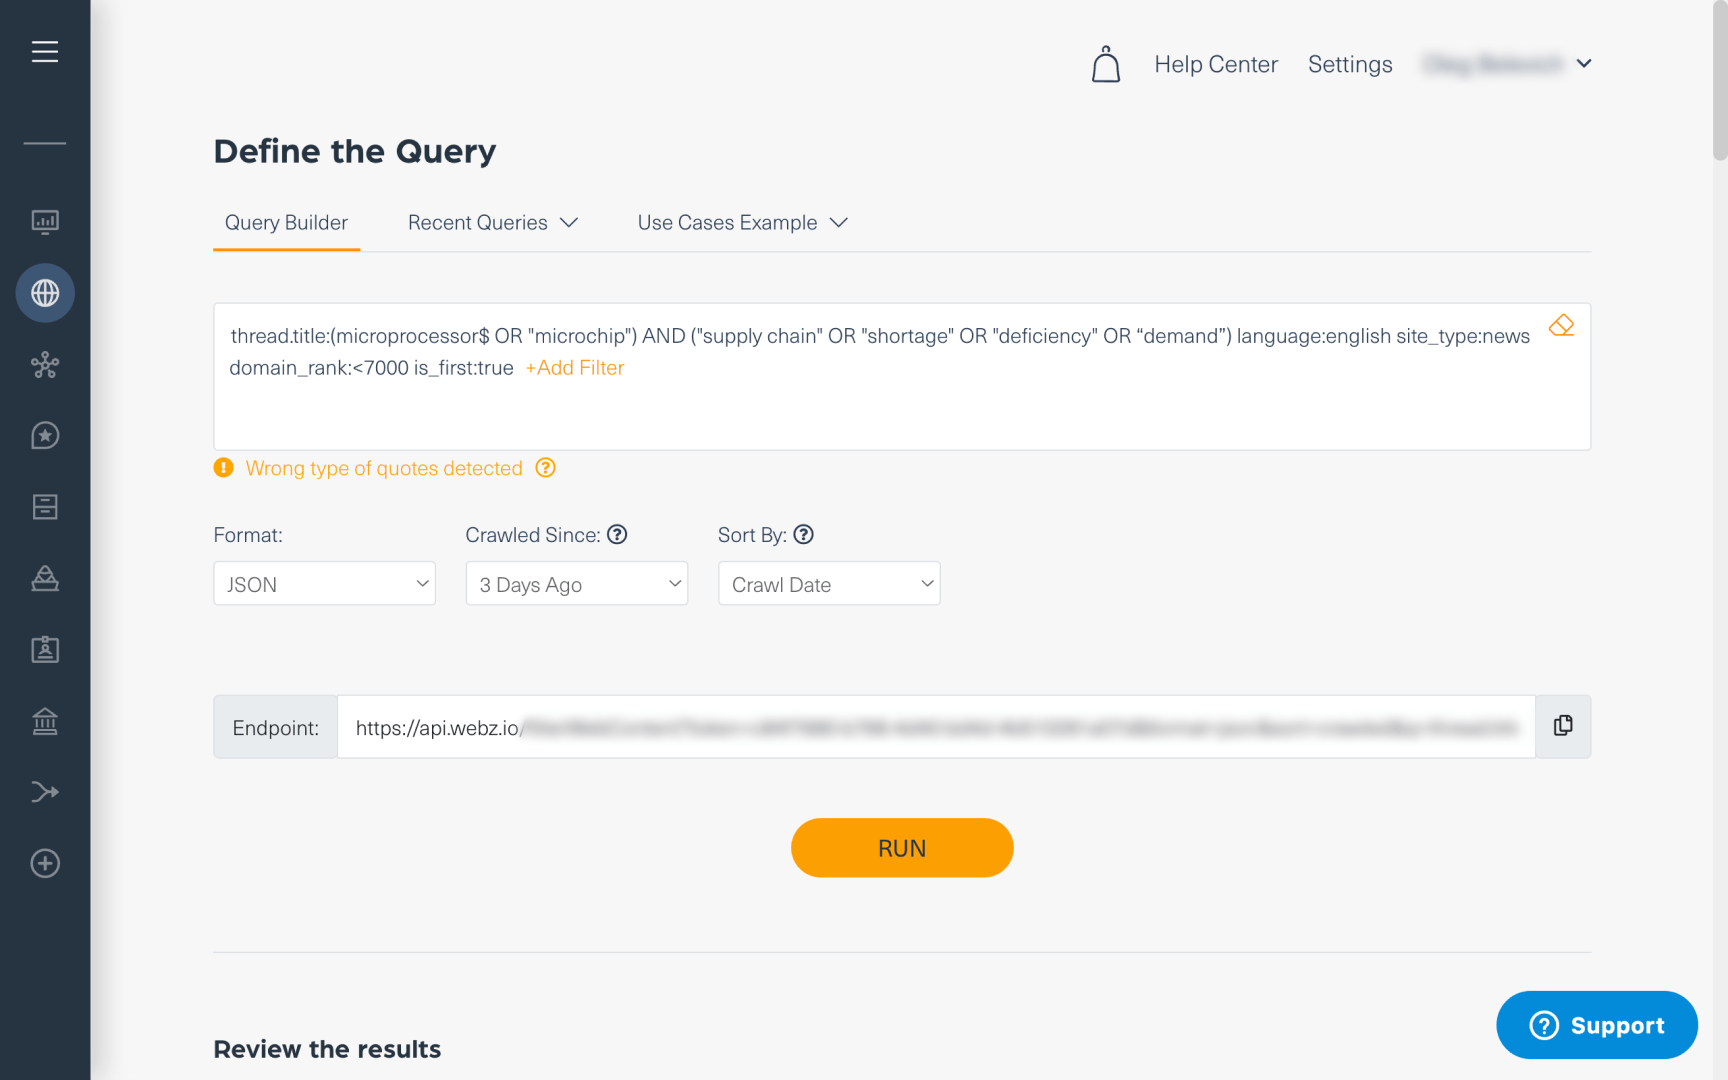 The query in Webz.io's playground